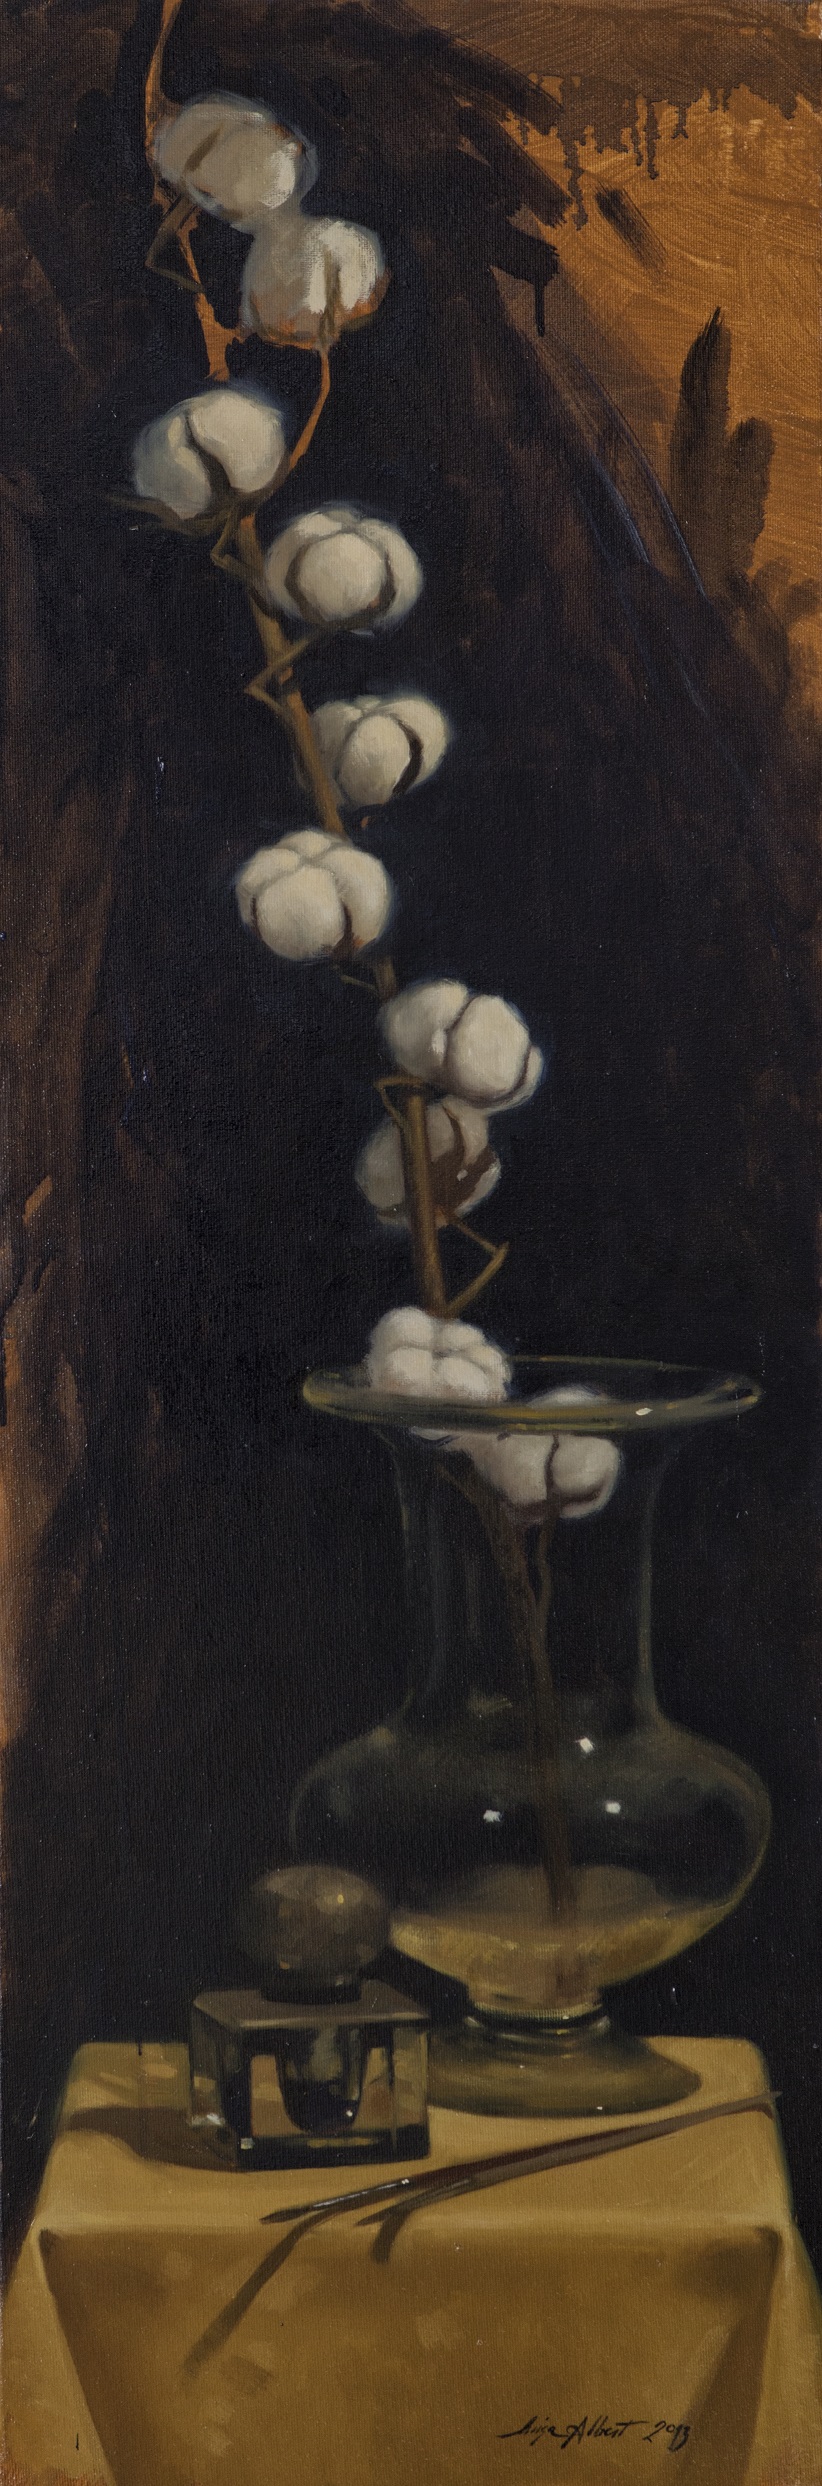 Albert, pittura italiana, natura morta, cotone, fiori